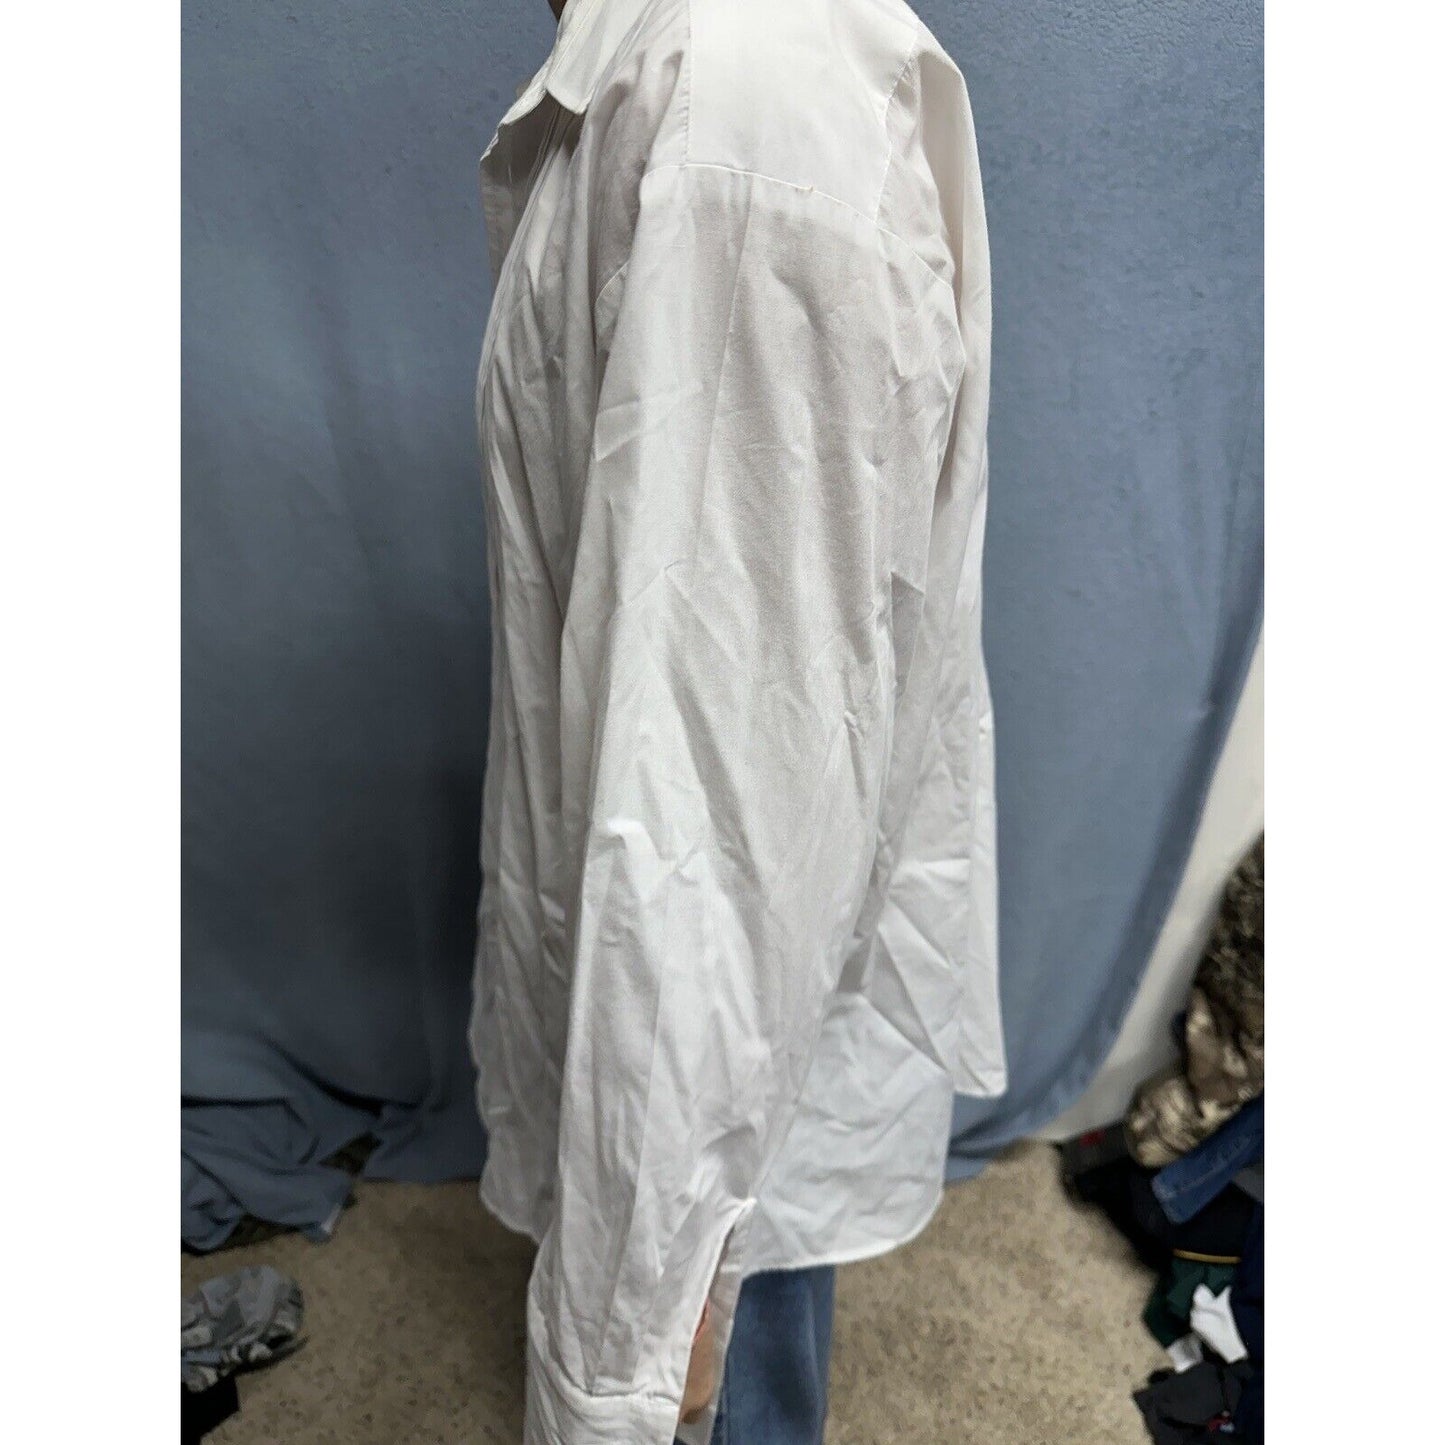 Air Force White Mess Dress Aetna Shirt 17 / 35 Long Sleeve Uniform